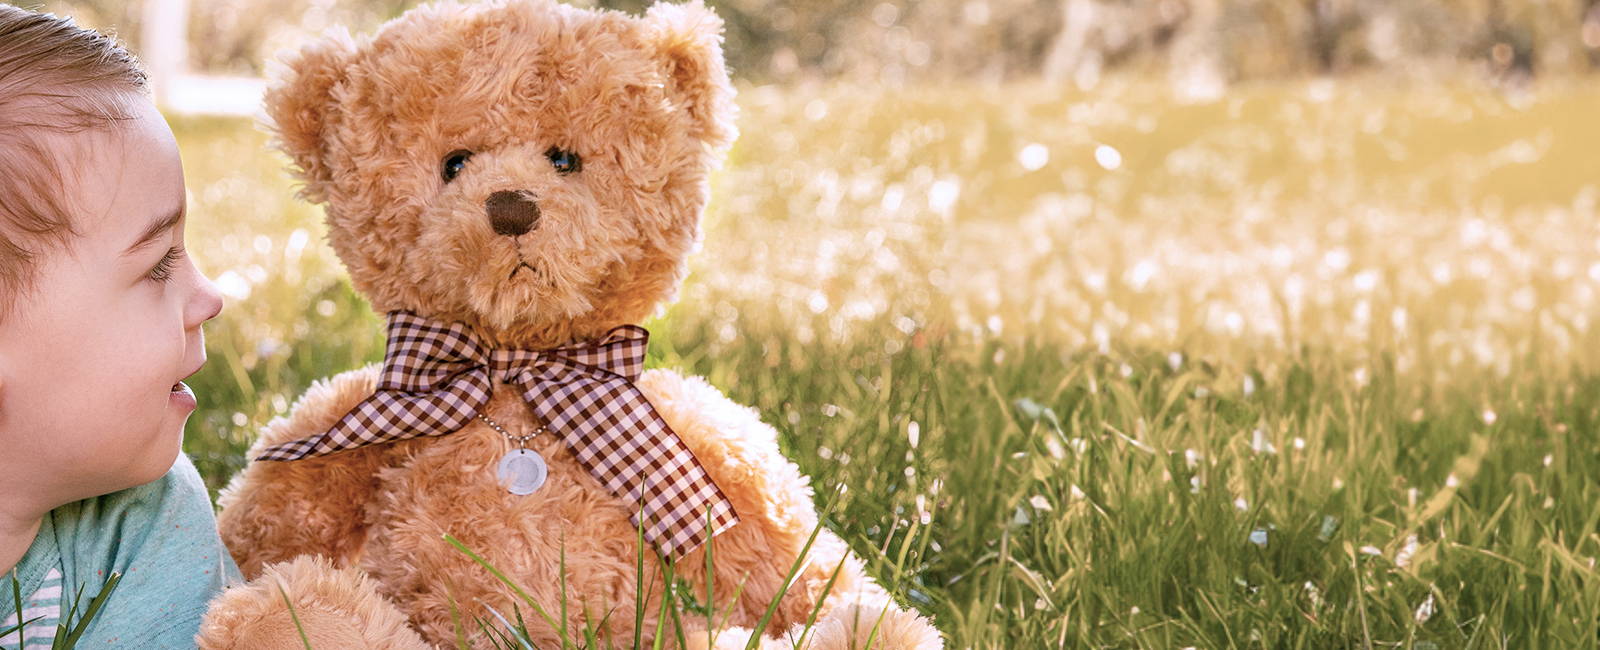 kid sitting with a memorial teddy bear